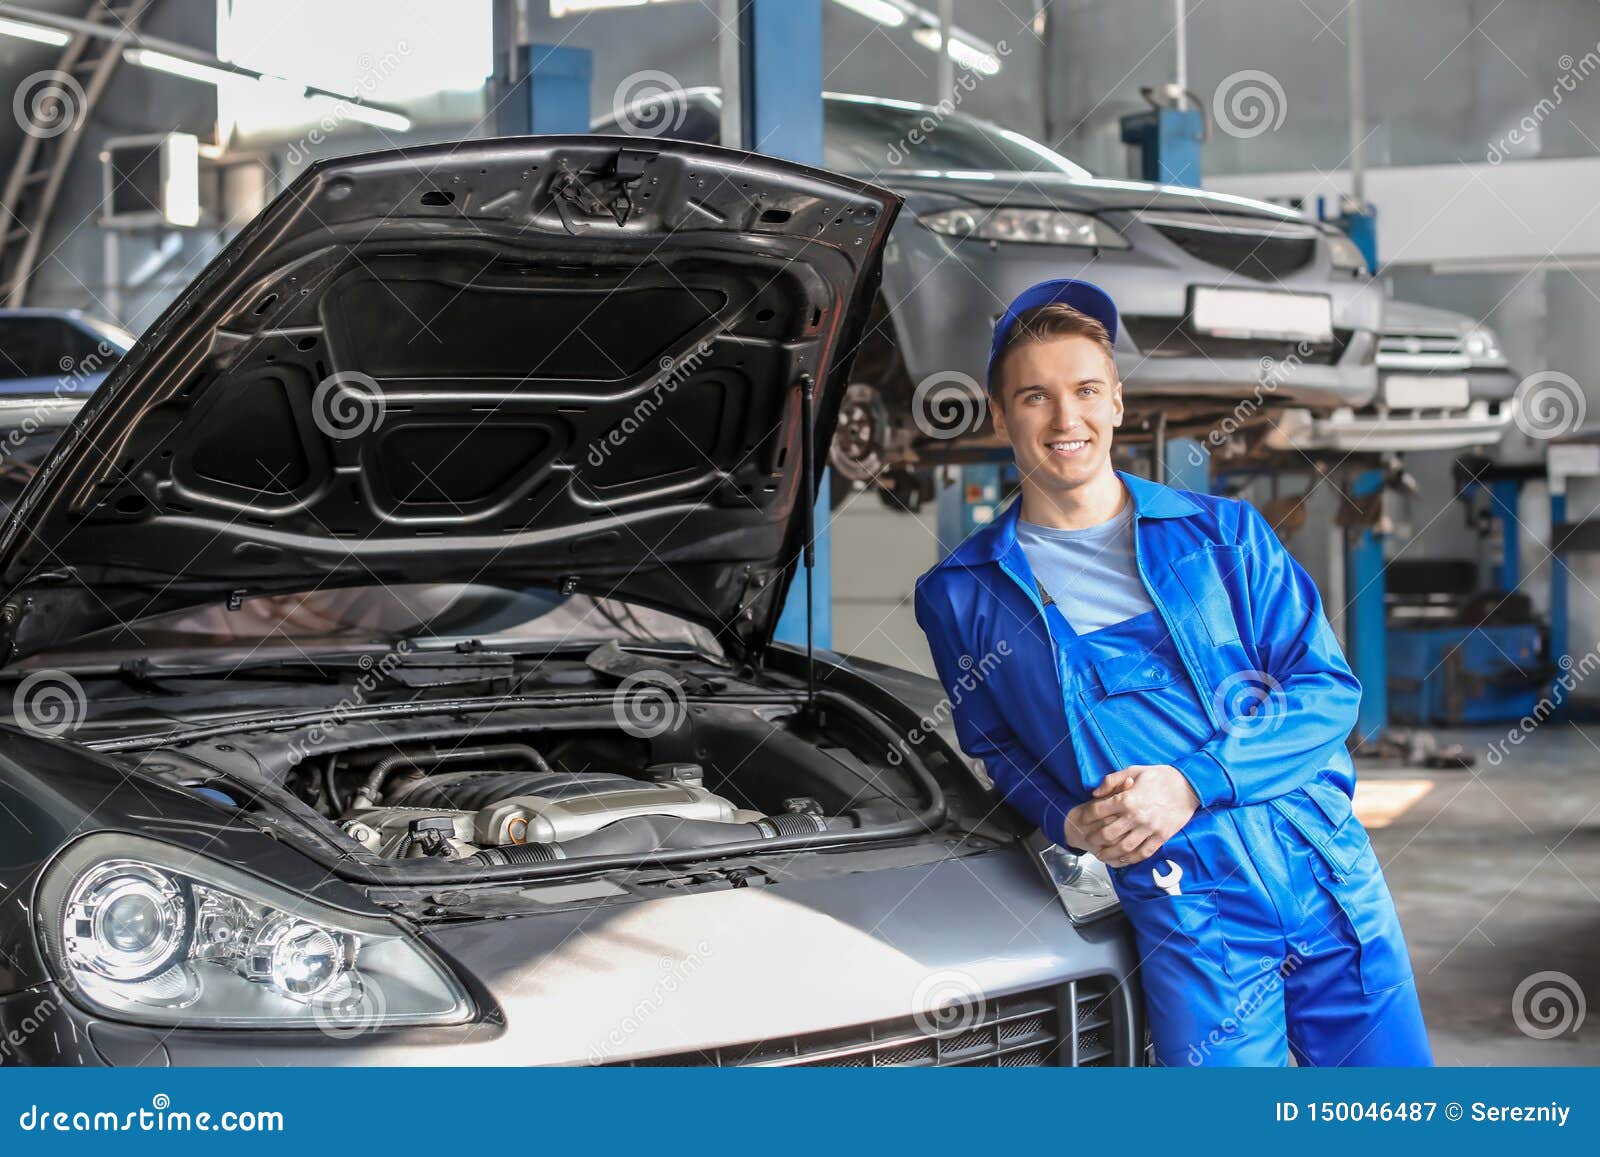 Portrait Of Male Mechanic Near Car In Service Center Stock Image